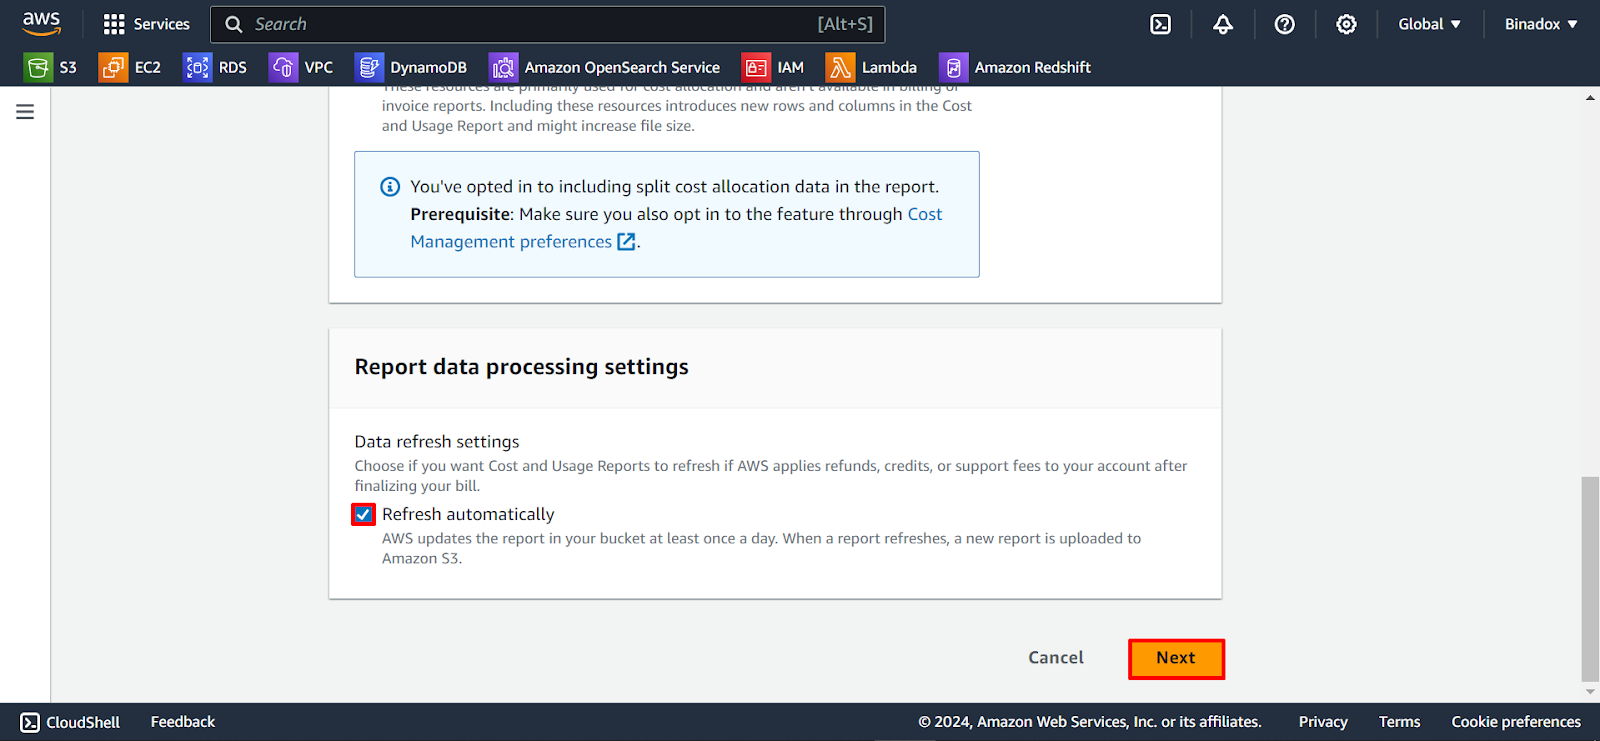 Report data processing settings